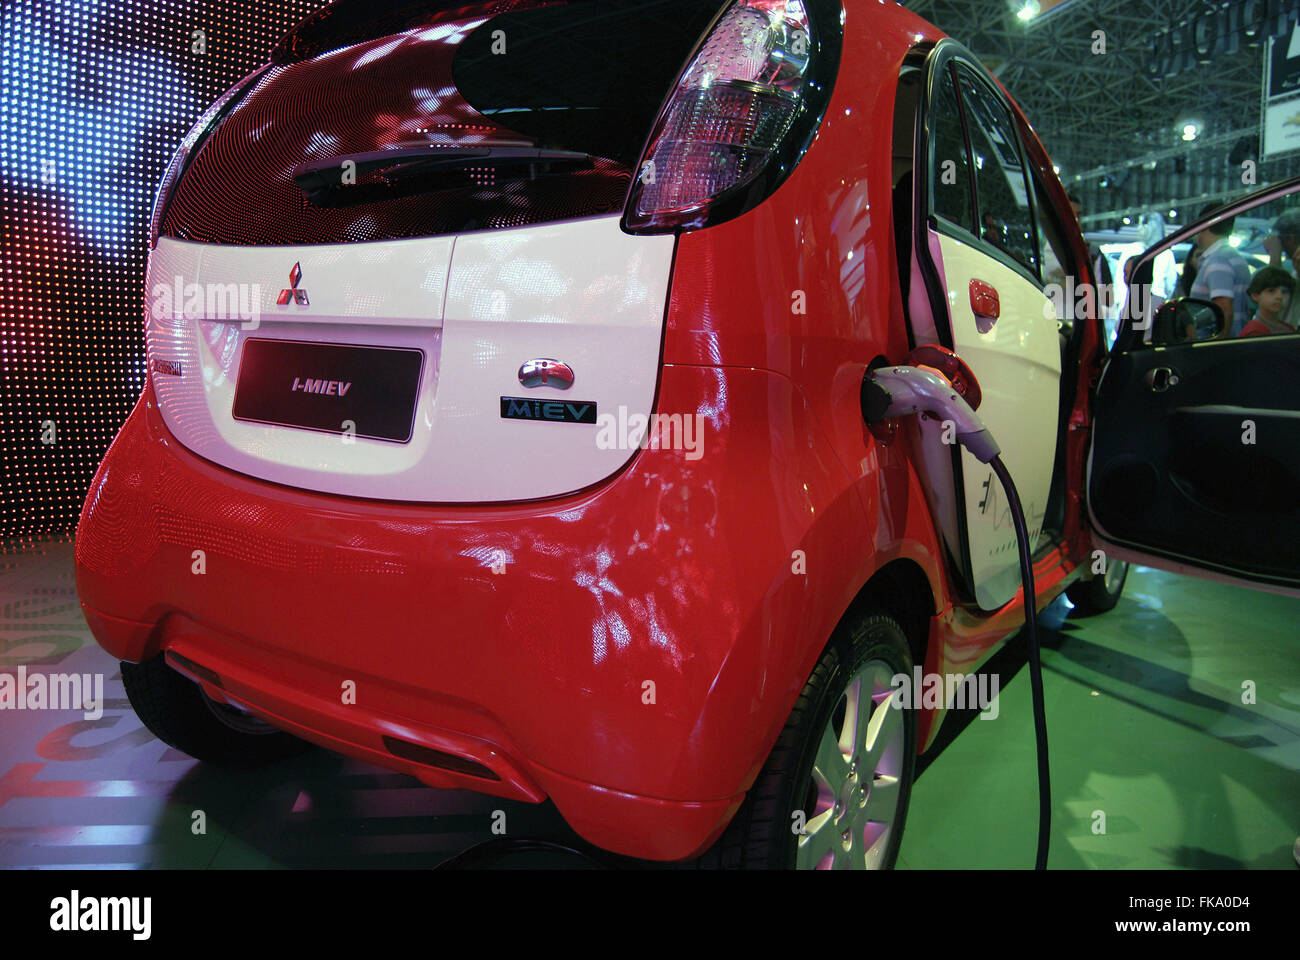 Motor Anhembi - Mitsubishi i Miev - electric car Stock Photo